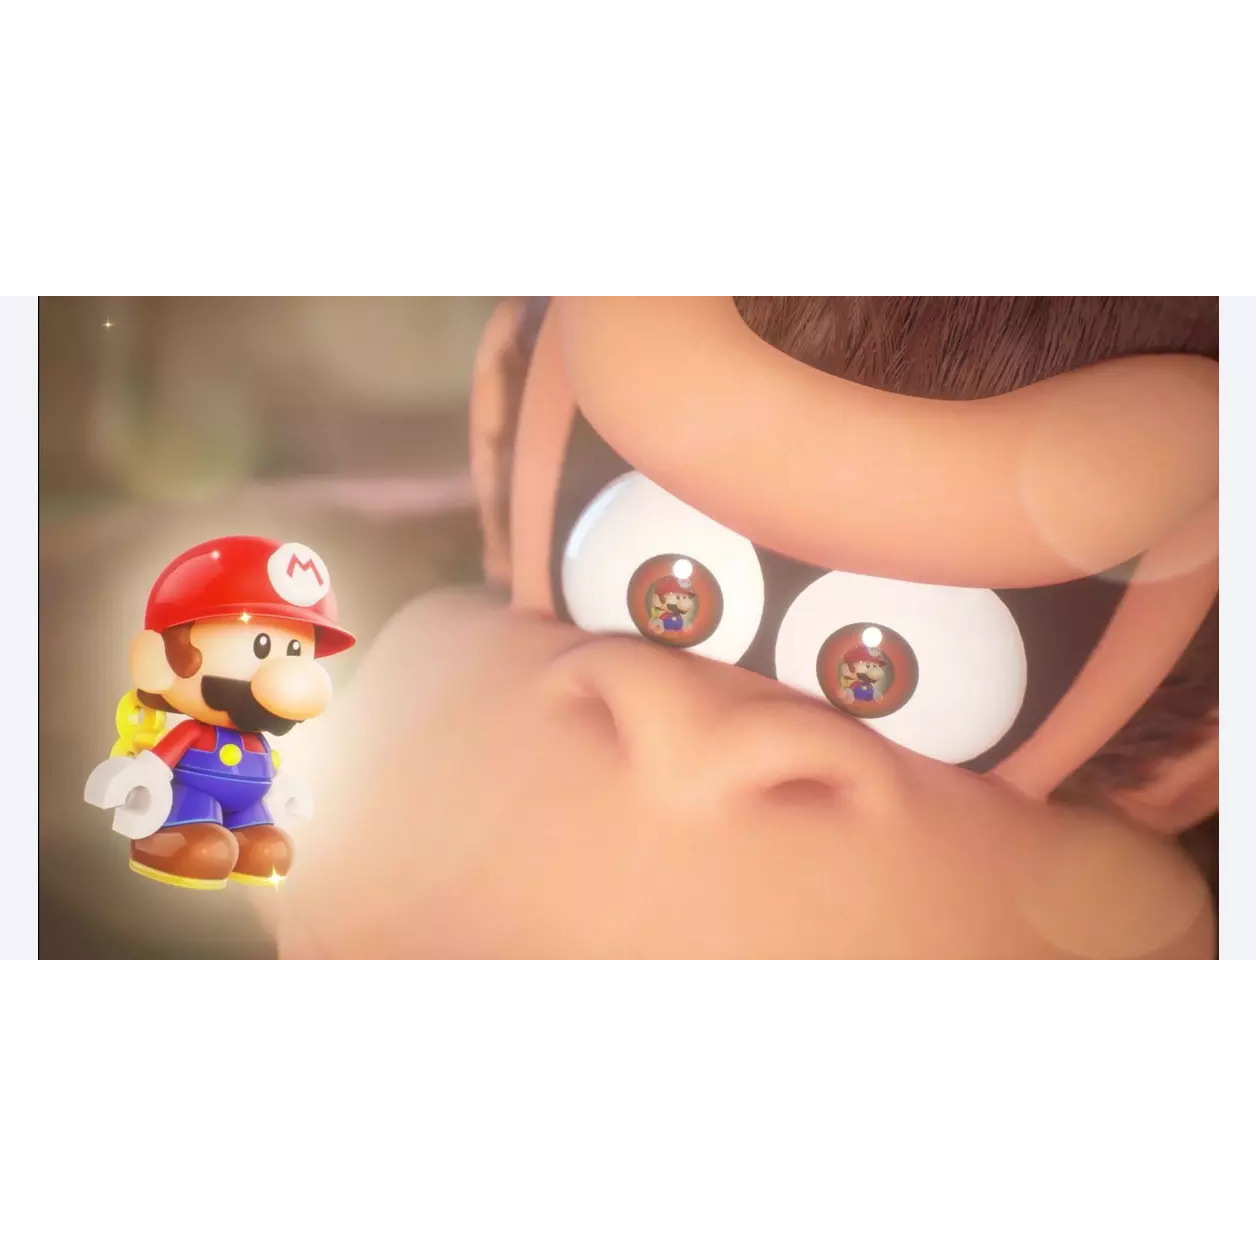 Mario vs Donkey Kong [Nintendo Switch Game] – Golden Discs